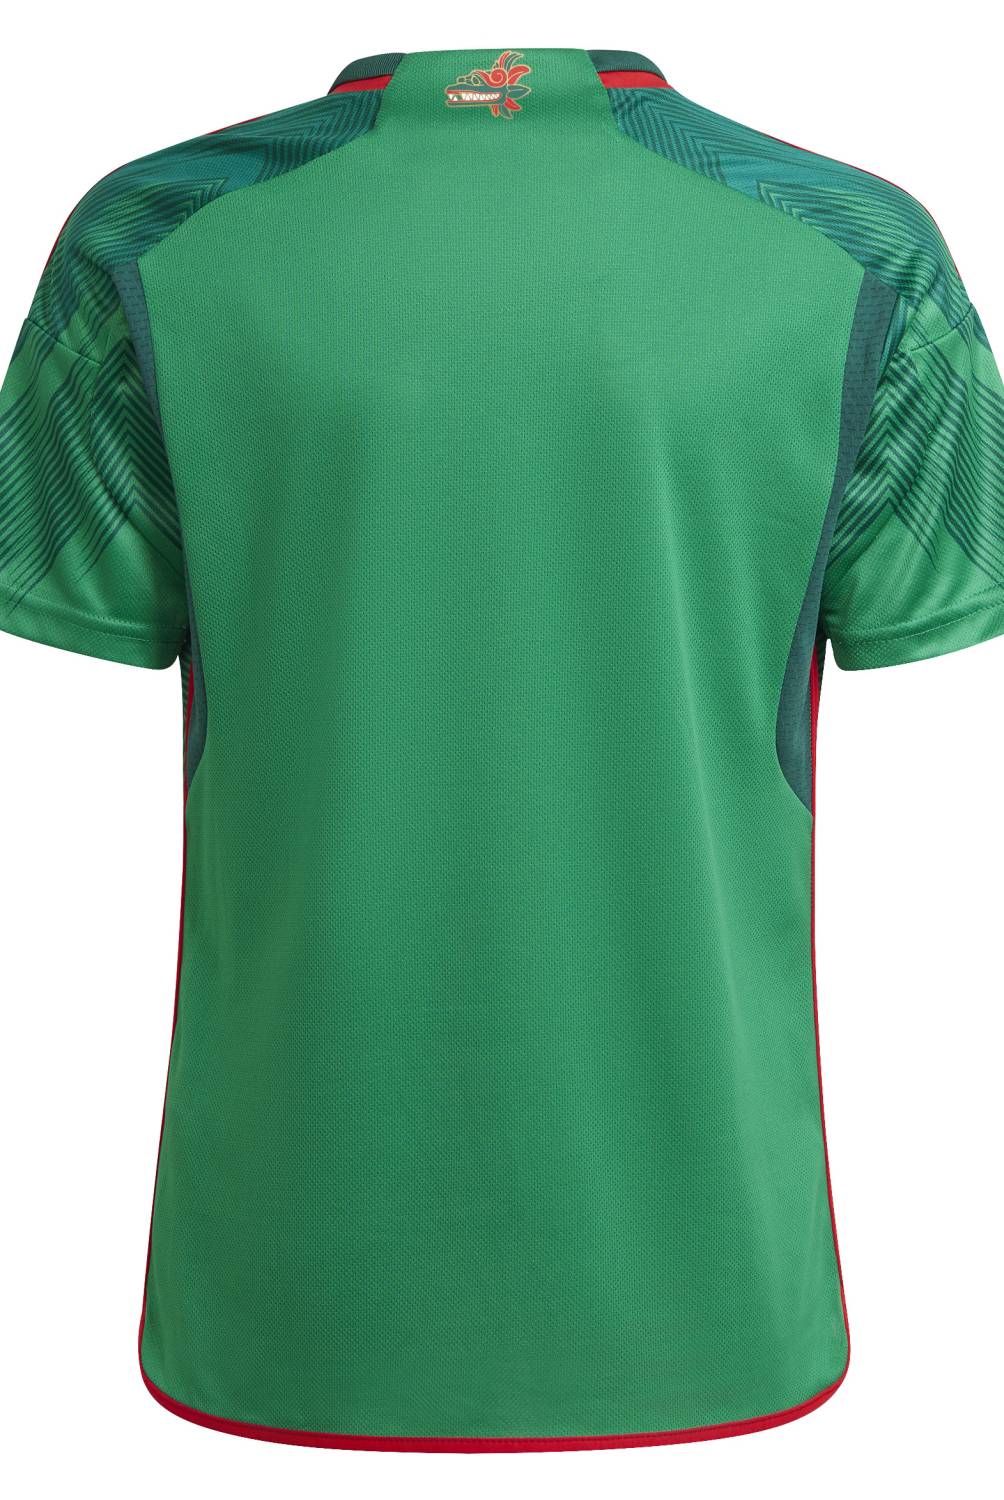 ADIDAS - Camiseta de Futbol Mexico Local Niño Adidas